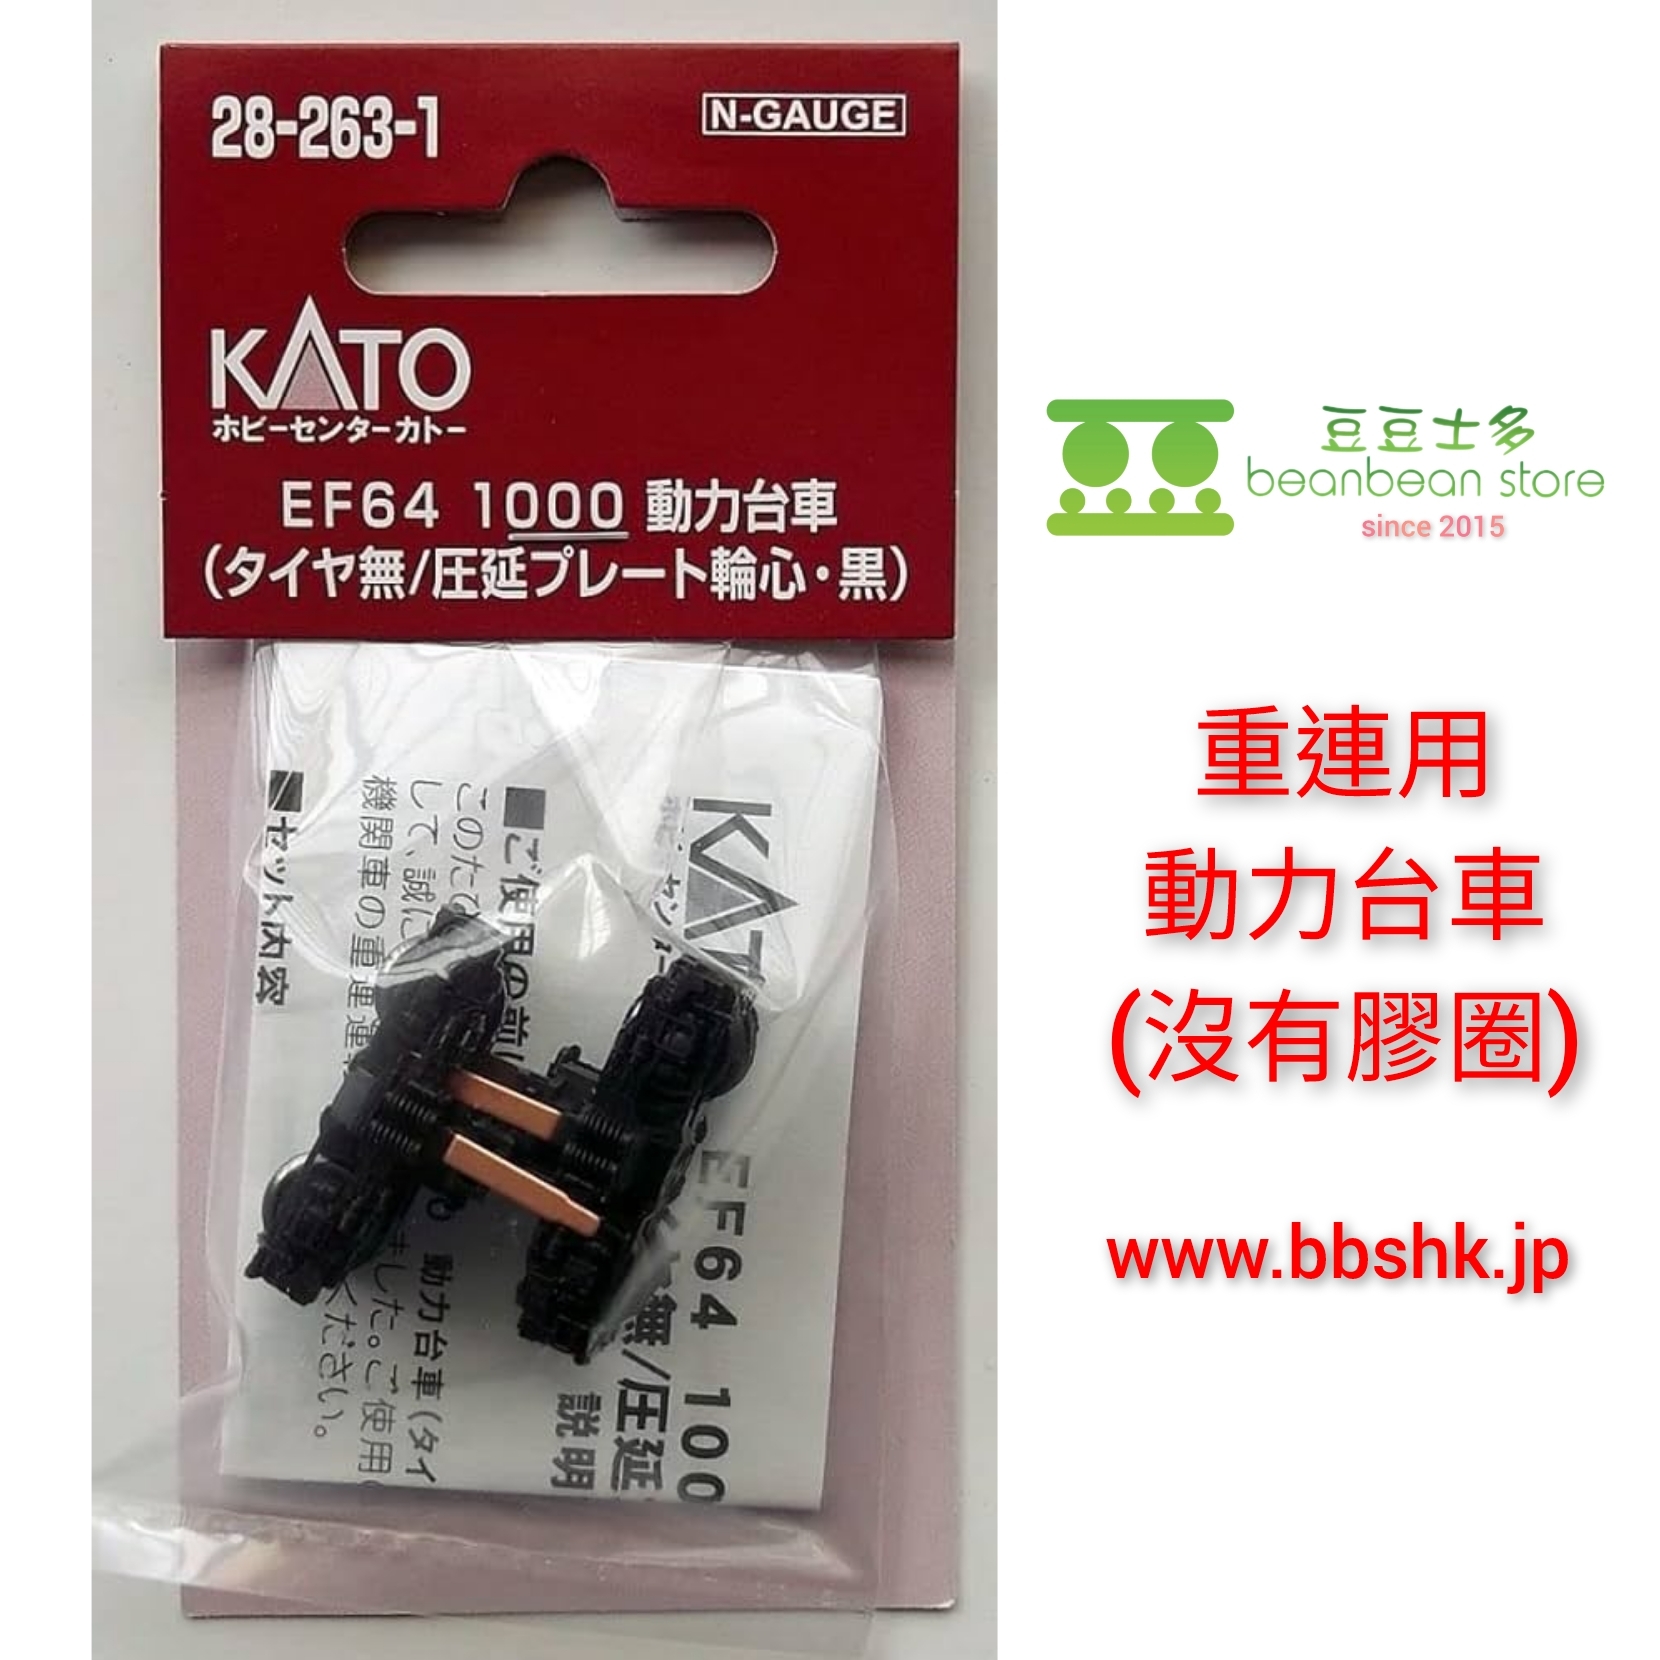 KATO 28-263-1 EF64 1000 重連用無膠圈動力台車(1両分)